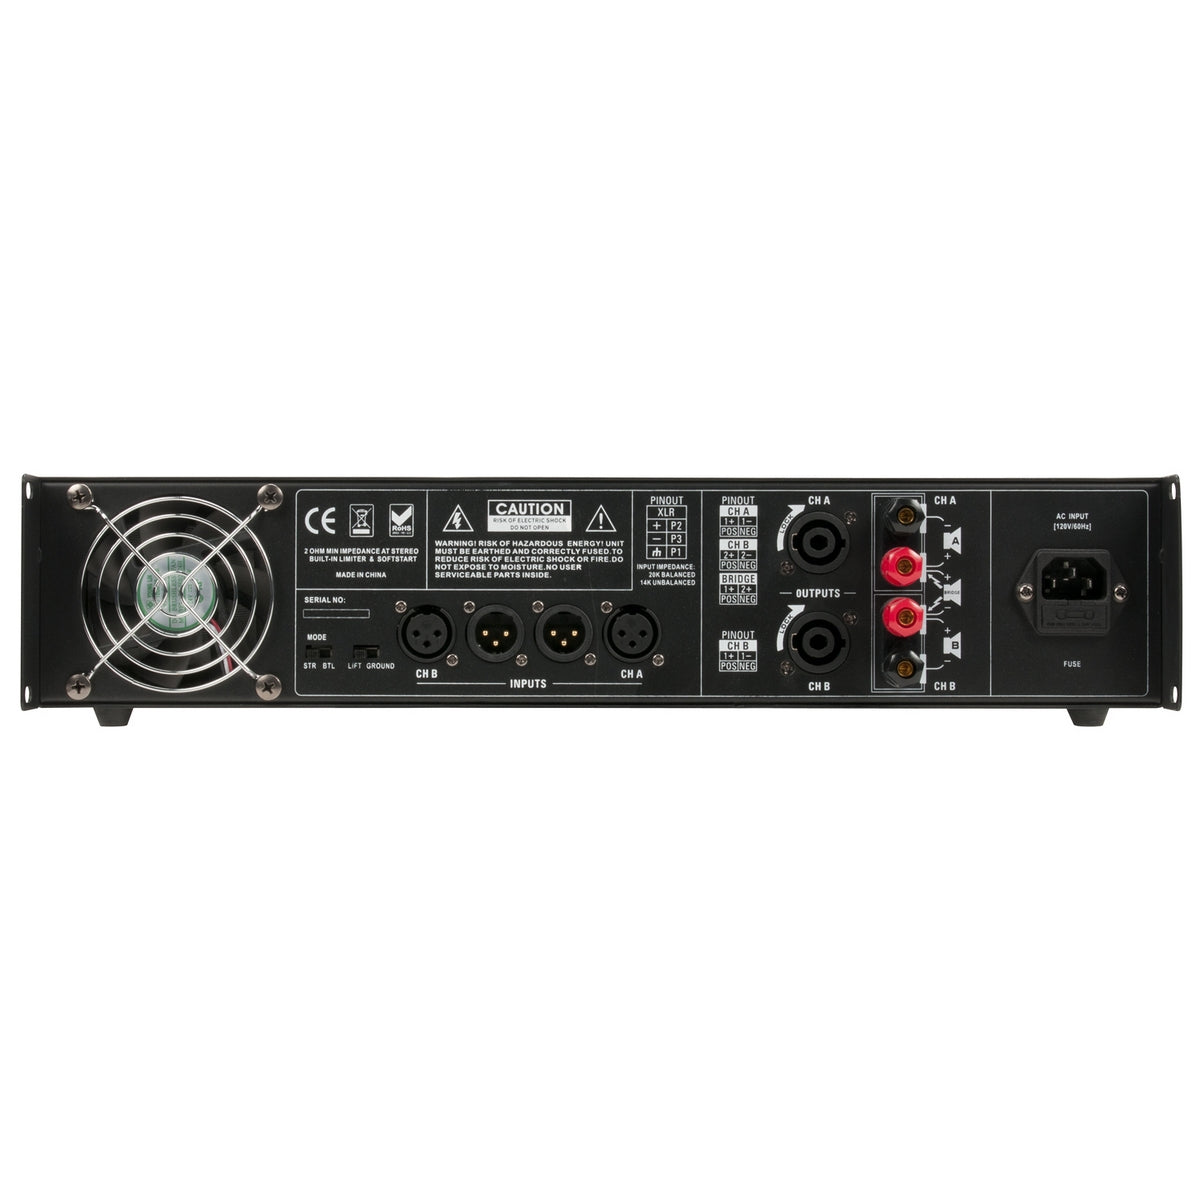 American Audio ELX3000 | Power Amplifier 500W RMS